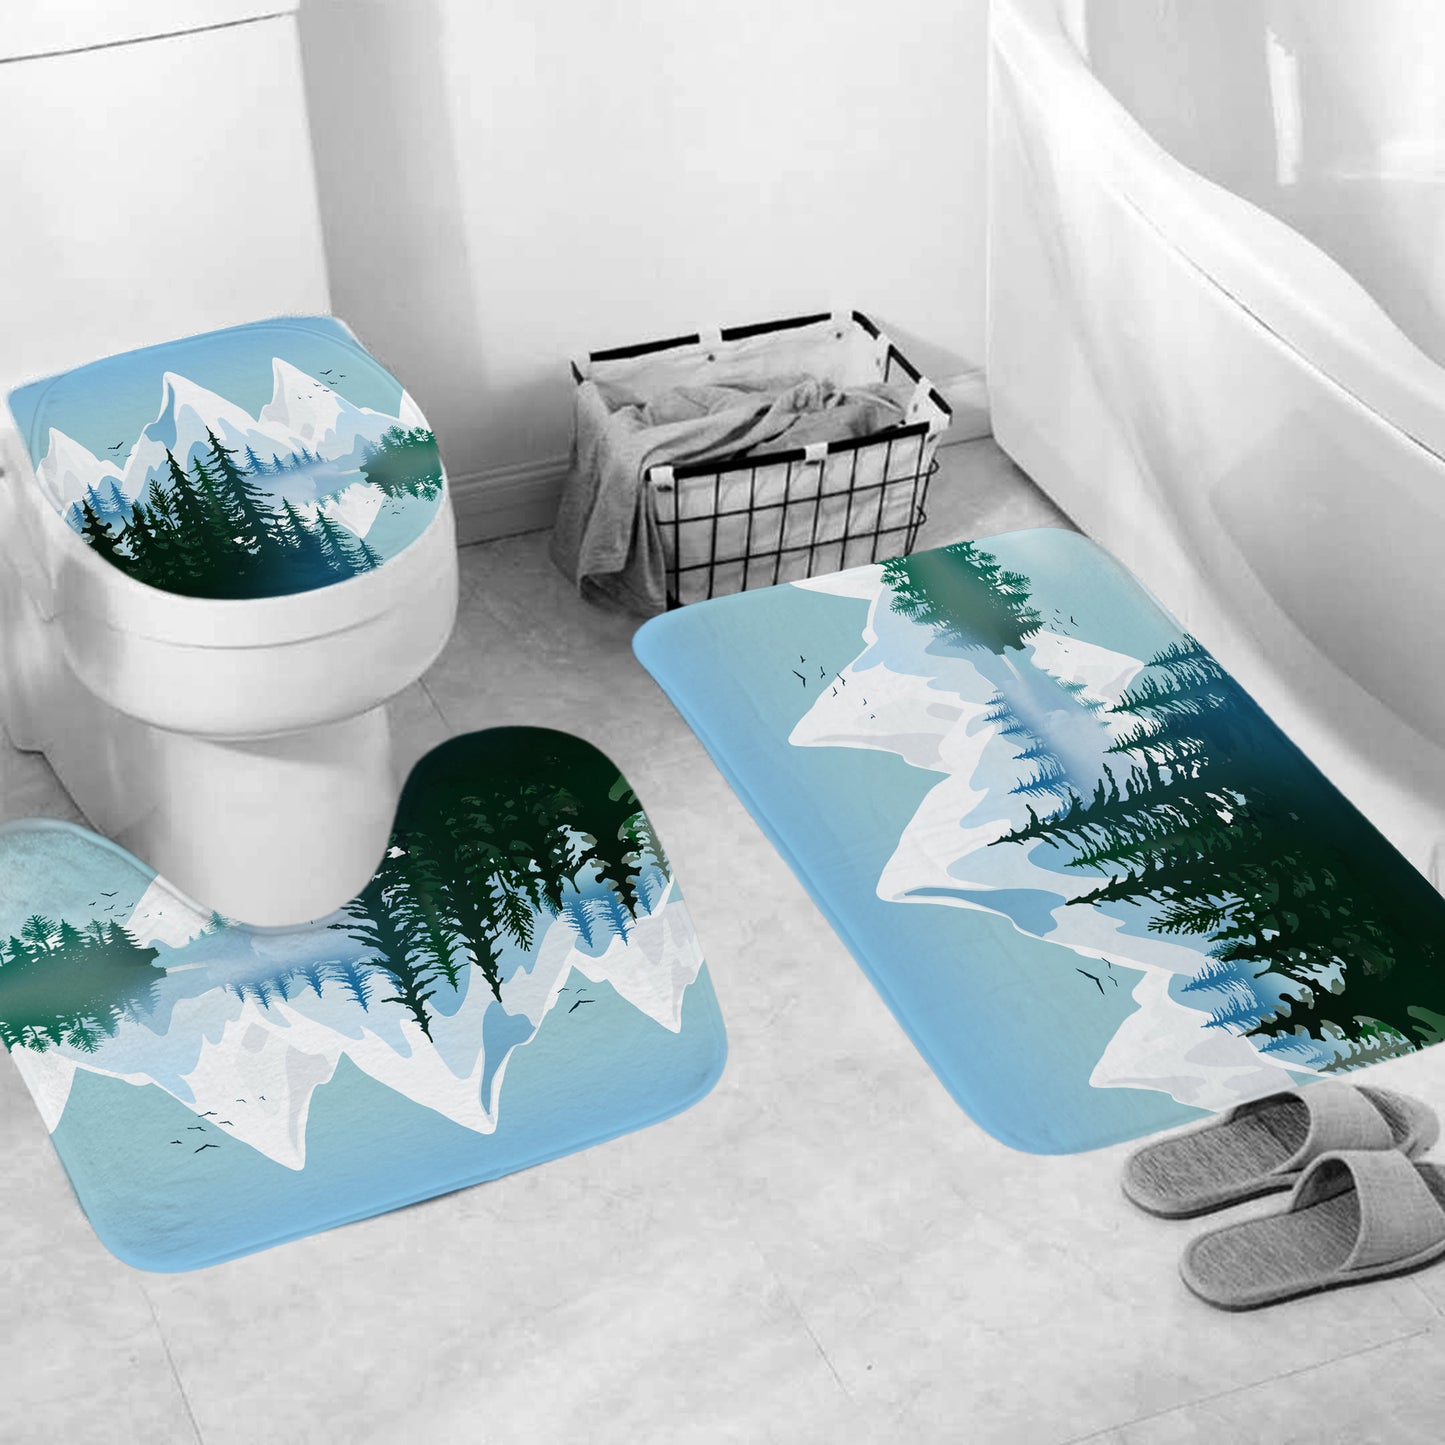 Northen Euro Snowberg Bathroom Fabric Shower Curtain Sets